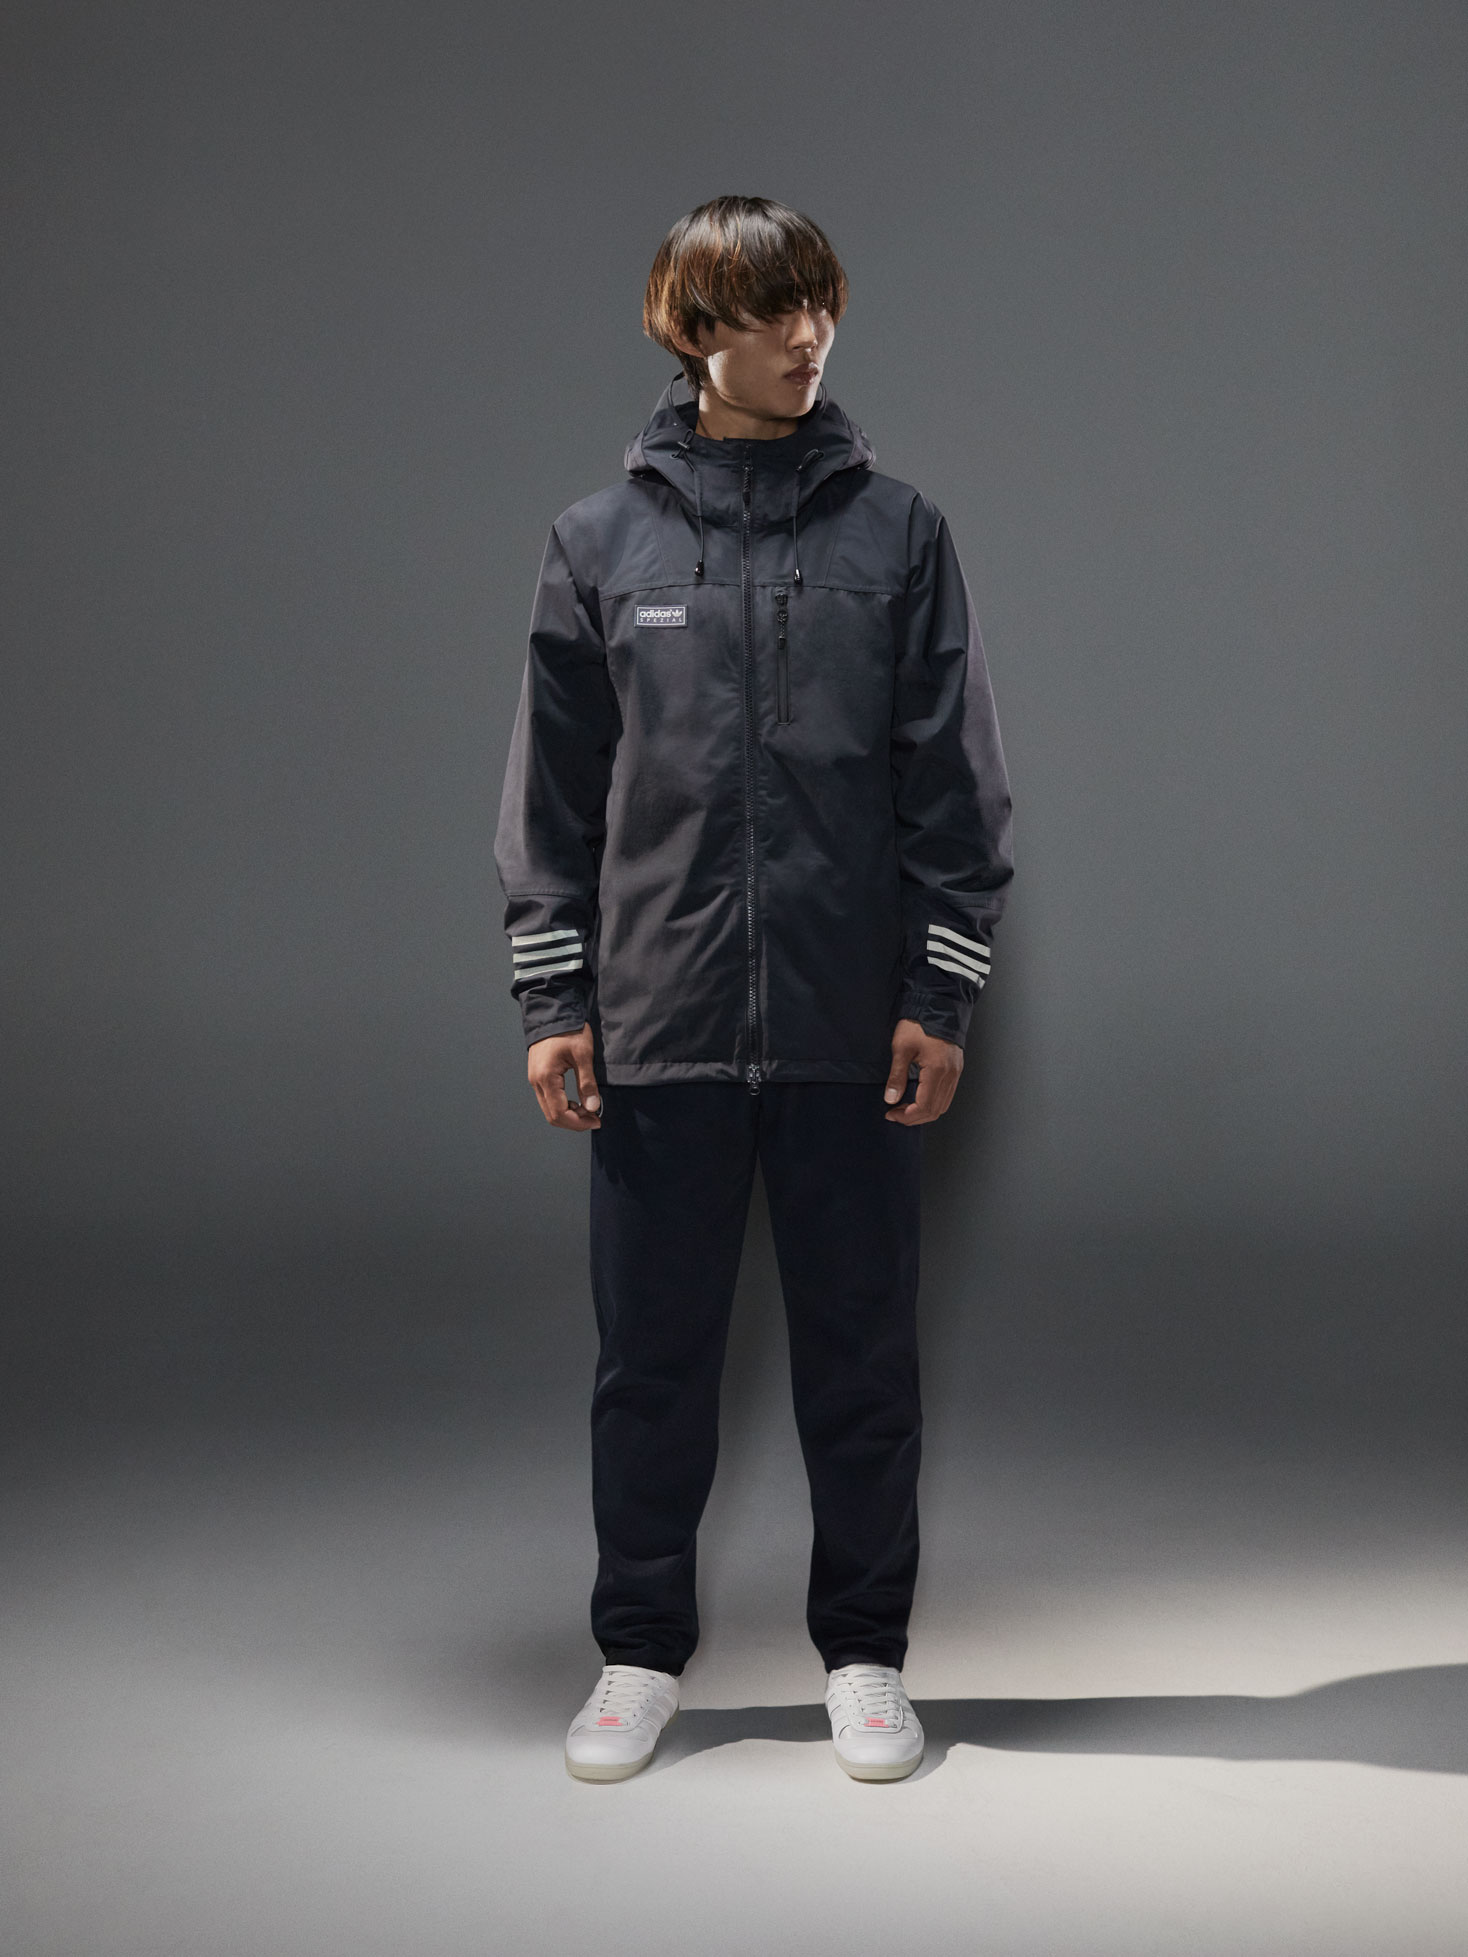 Adidas spezial new order otter mercator